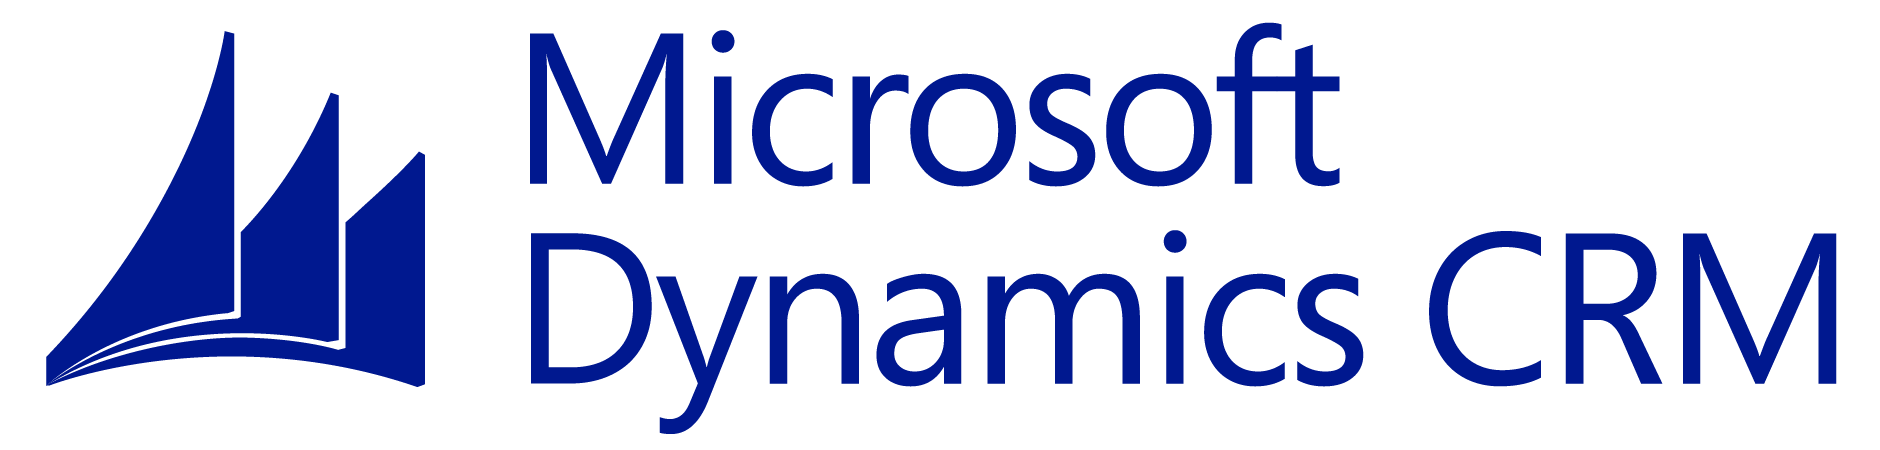 Dynamics CRM 2016 Logo - Management Training, Business Training and IT Training - TekSource ...